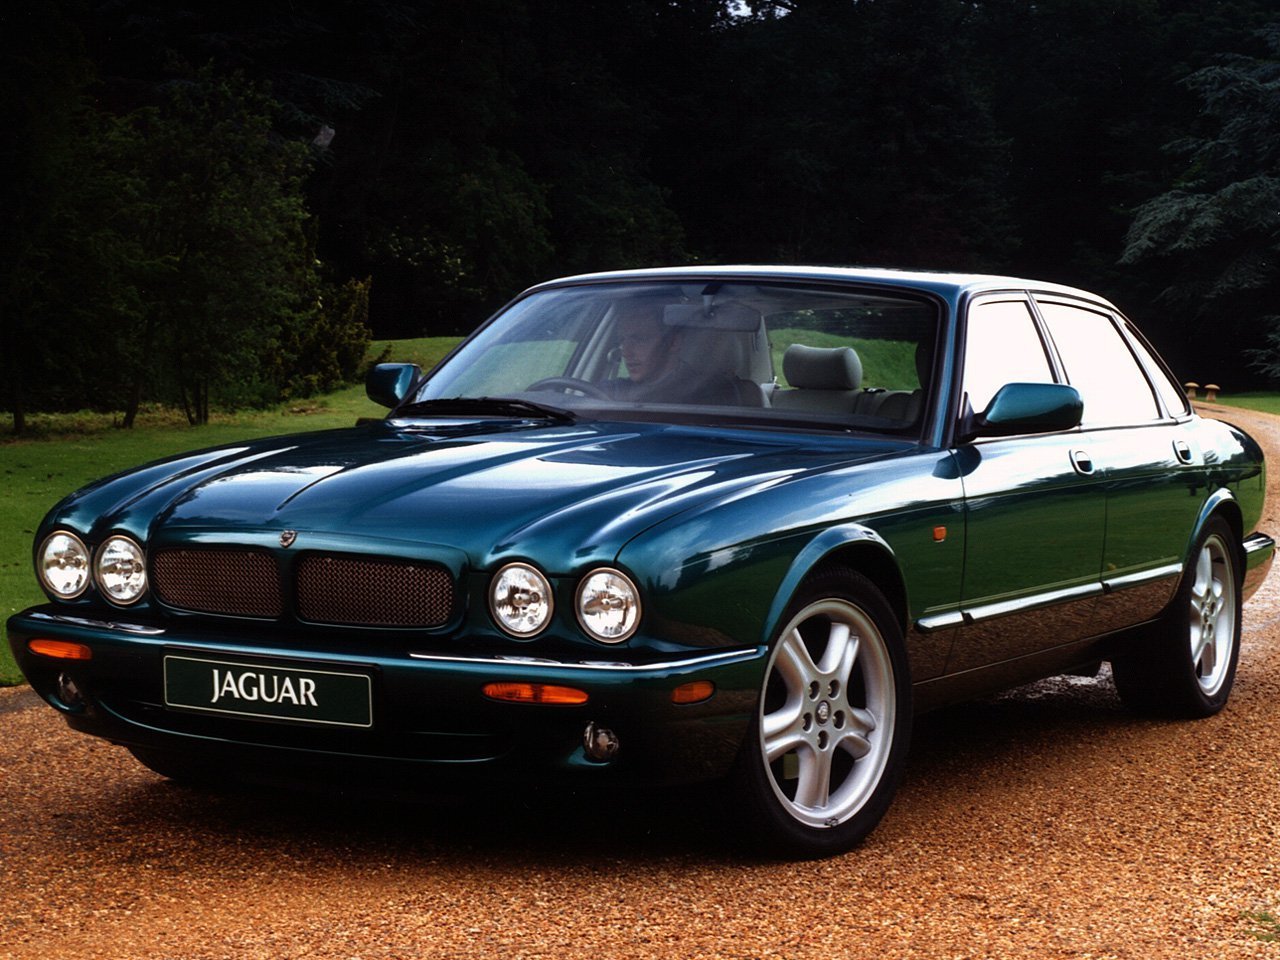 Снижаем расход Jaguar XJR на топливо, устанавливаем ГБО